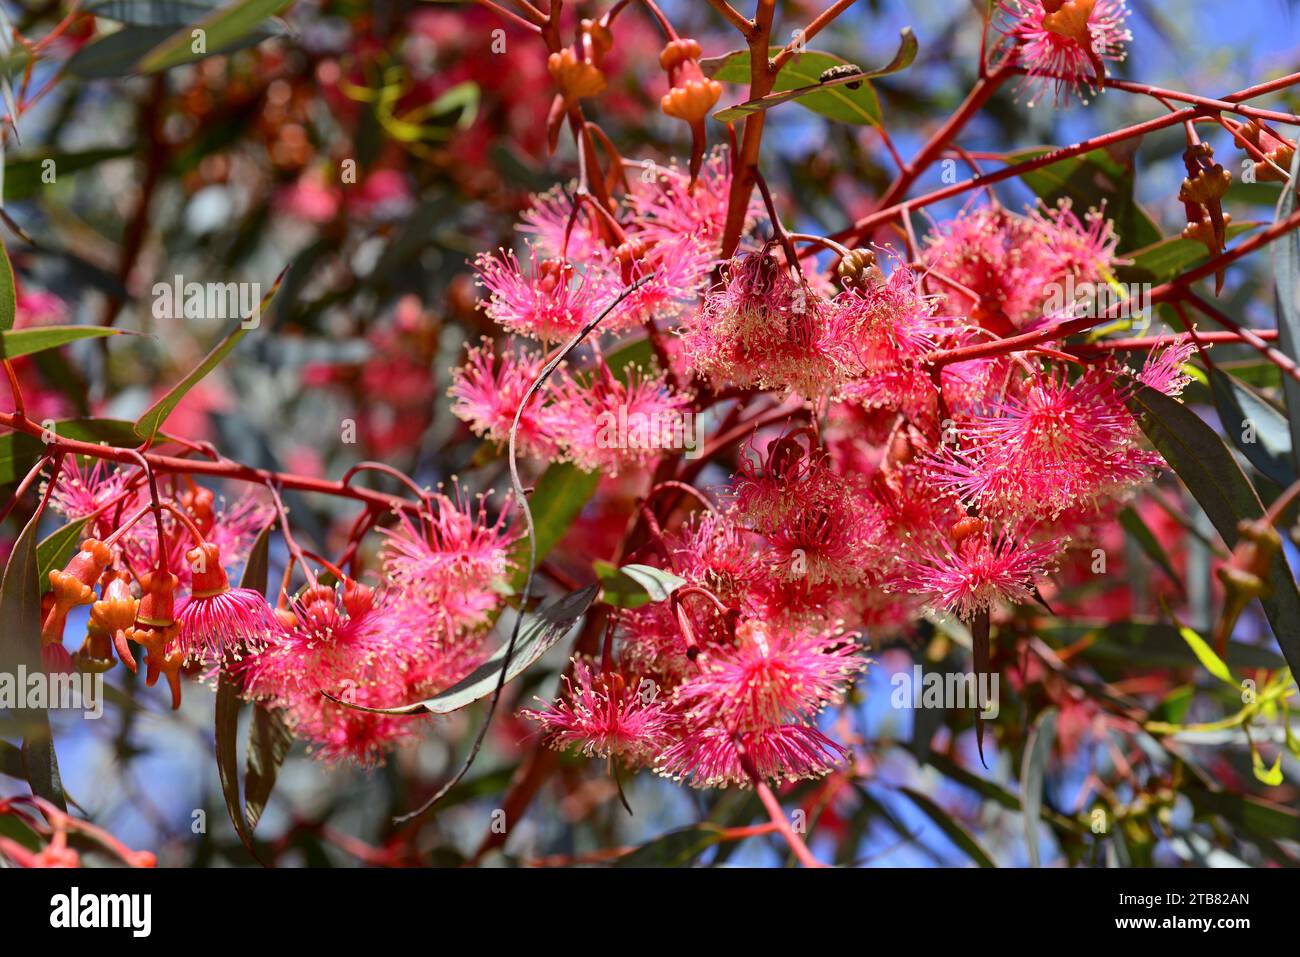 Coral gum or Coolgardie gum (Eucalyptus torquata) is a small tree endemic to western Australia. Flowers detail. Stock Photo